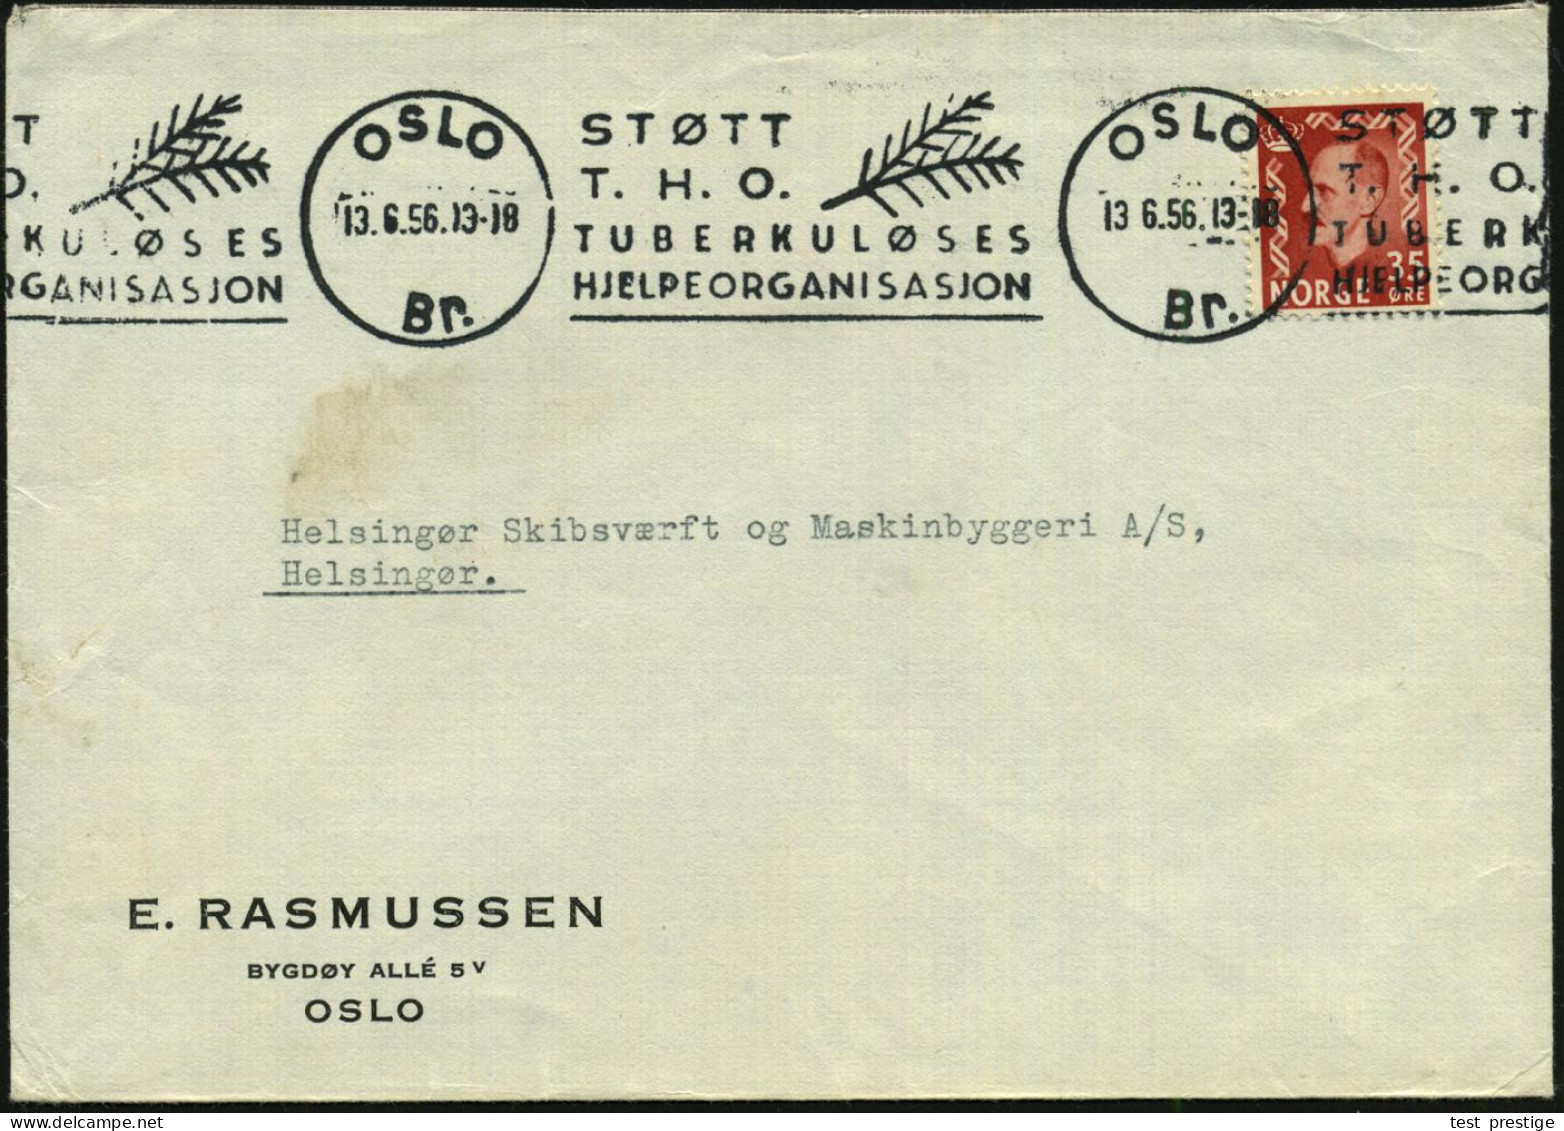 NORWEGEN 1956 (Juni) Band-MWSt: OSLO/Br./STÖTT/T.H.O./TUBERKULÖSES/HJELPEORGANISASJON (Zweig) Klar Gest. Bedarfsbf. - TU - Maladies